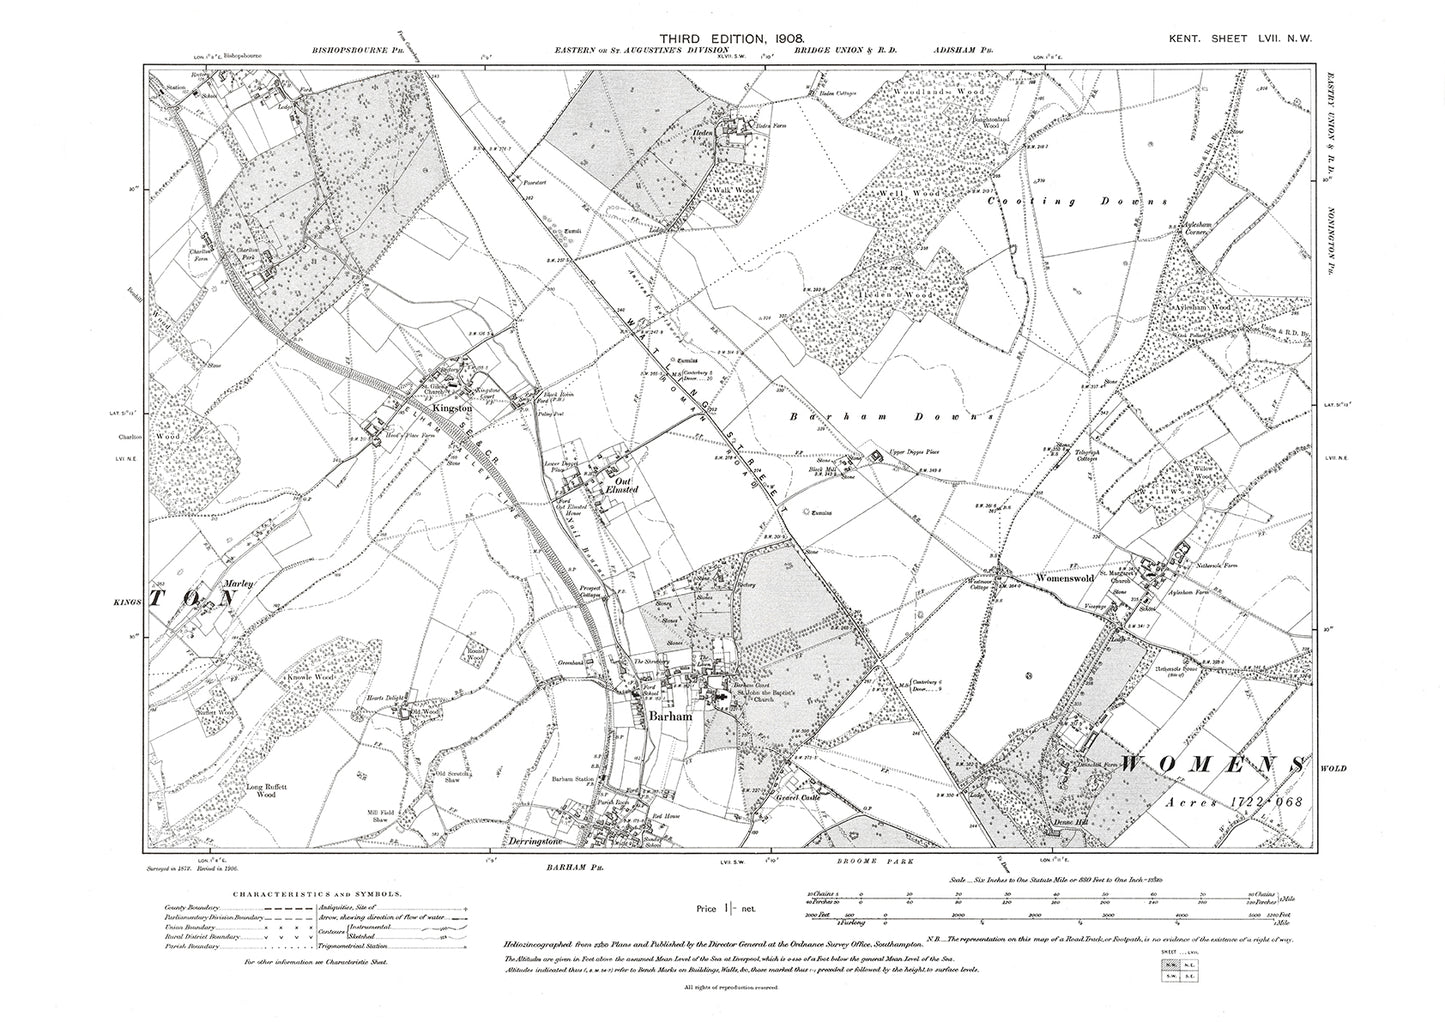 Barham, Derringstone, Kingston, Womenswold, old map Kent 1908: 57NW